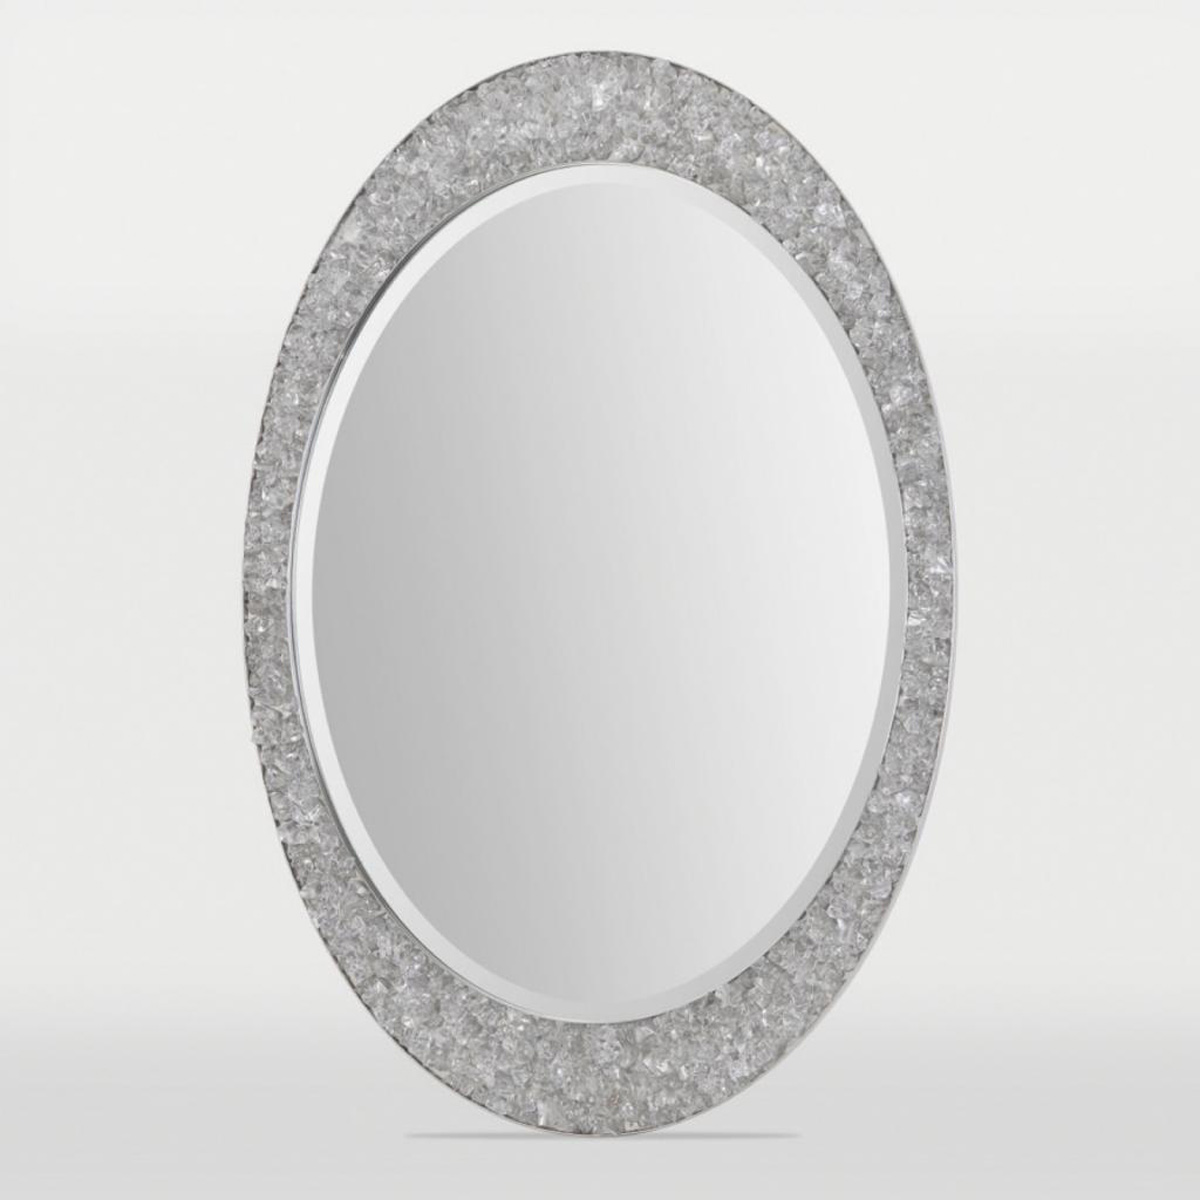 Ren-Wil Sirens Mirror - Brushed Nickel